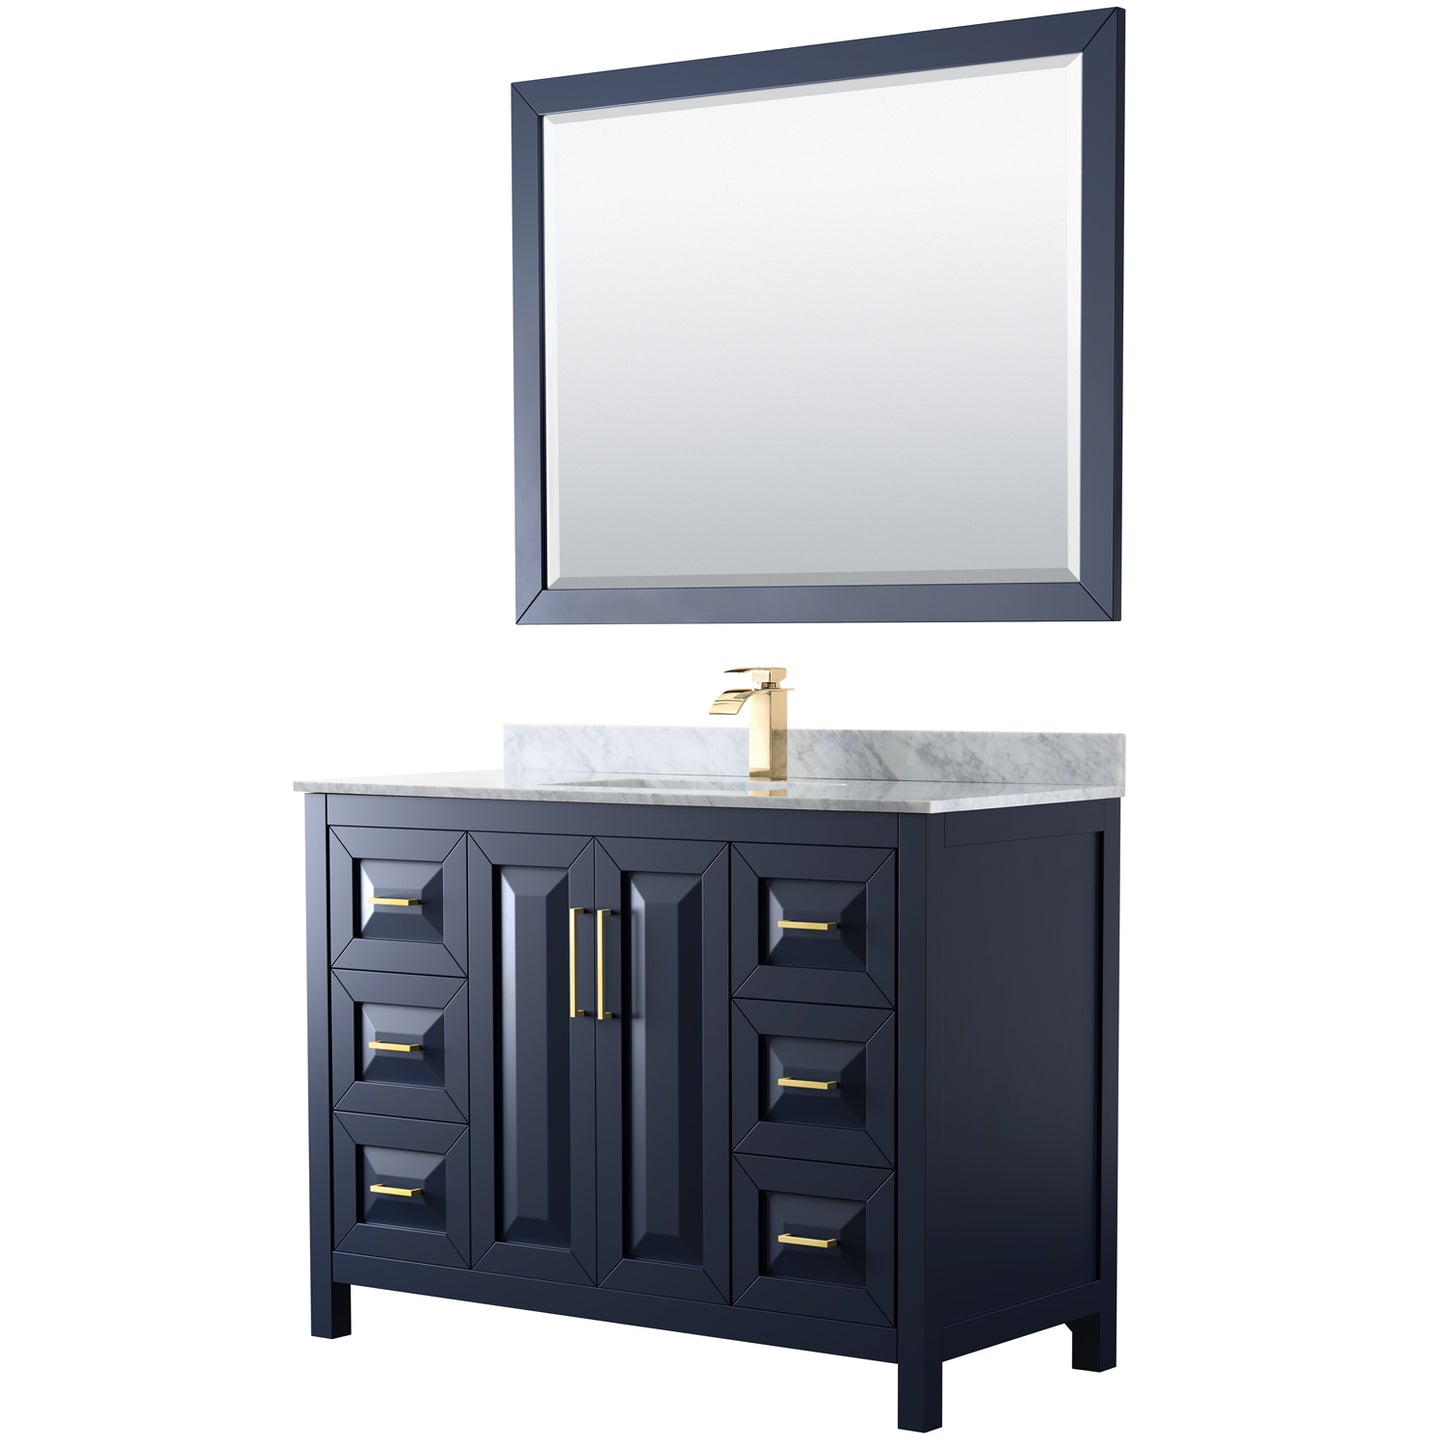 48 Inch Single Bathroom Vanity in Dark Blue, White Carrara Marble Countertop, Undermount Square Sink, 46 Inch Mirror - Luxe Bathroom Vanities Luxury Bathroom Fixtures Bathroom Furniture